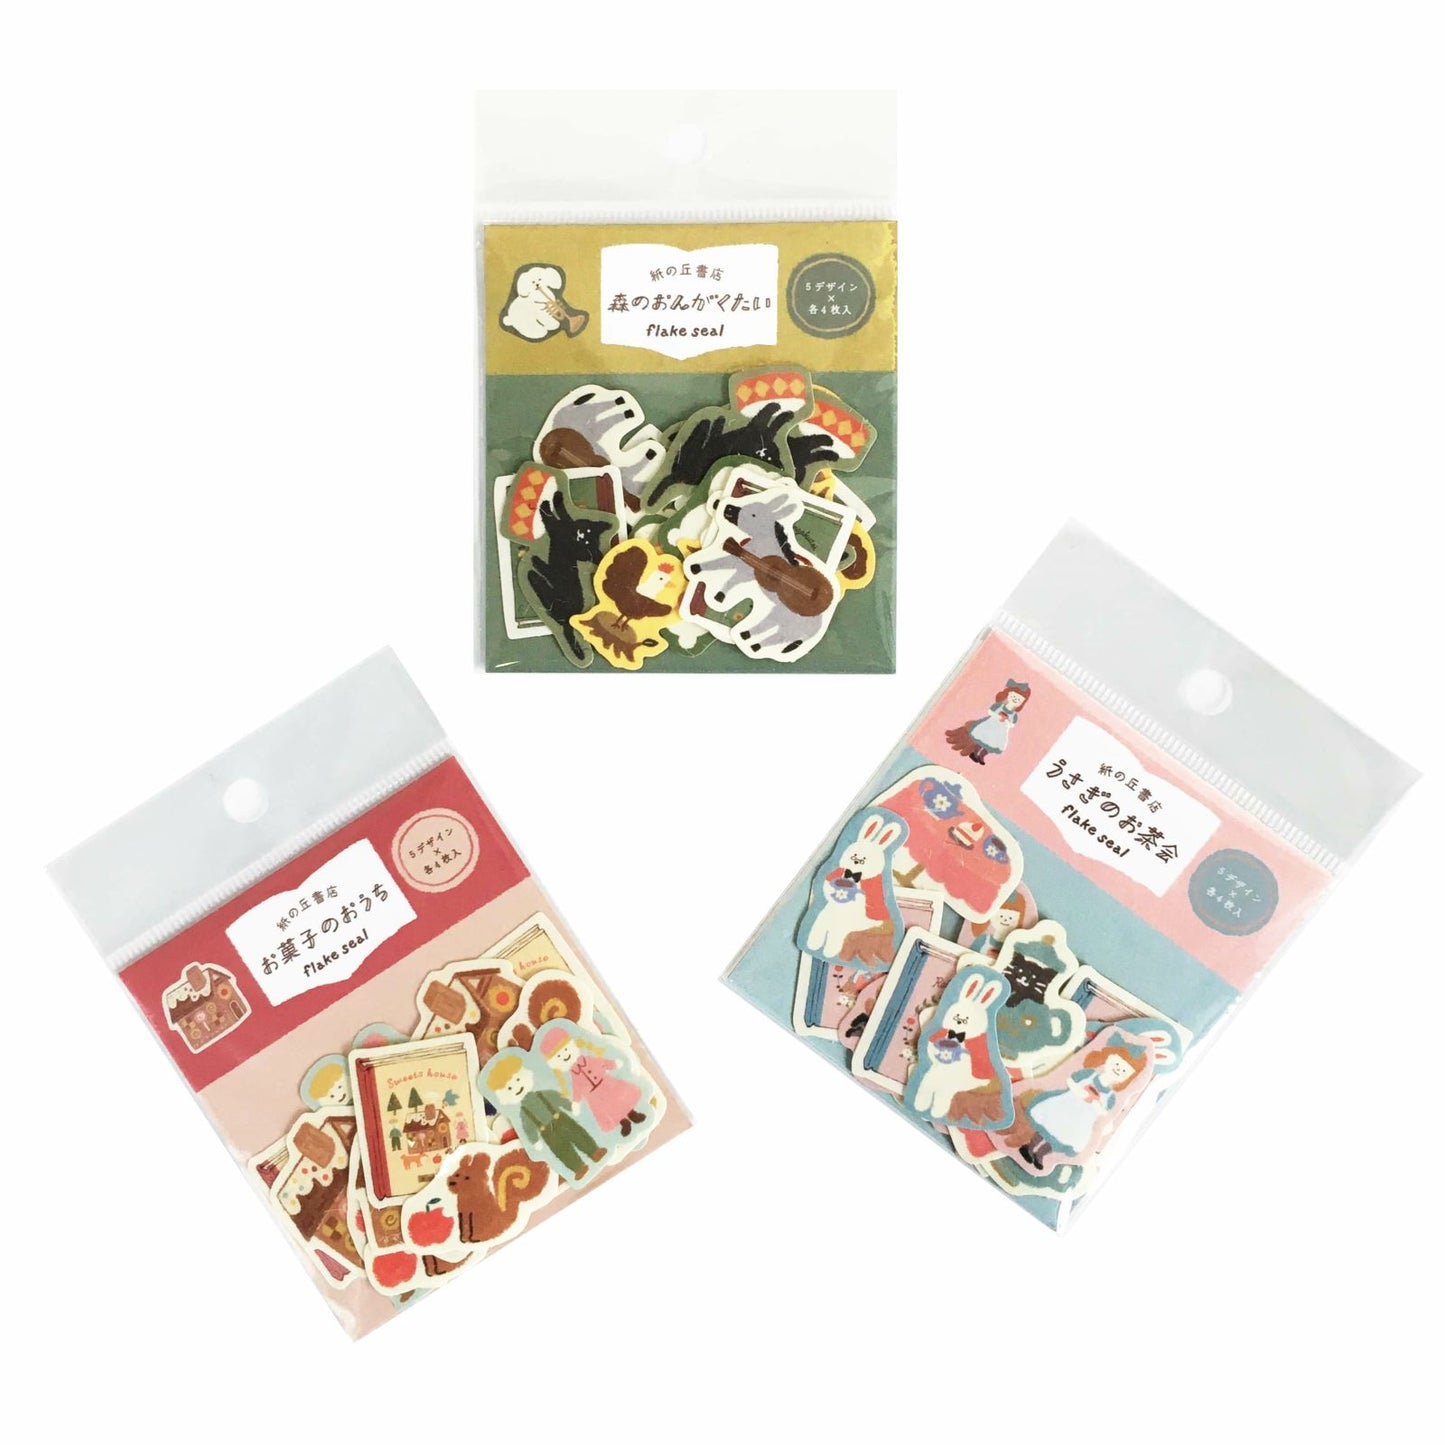 Furukawashiko Washi Flake Seal Sticker Packet - Bunny Tea Party, Limited Edition